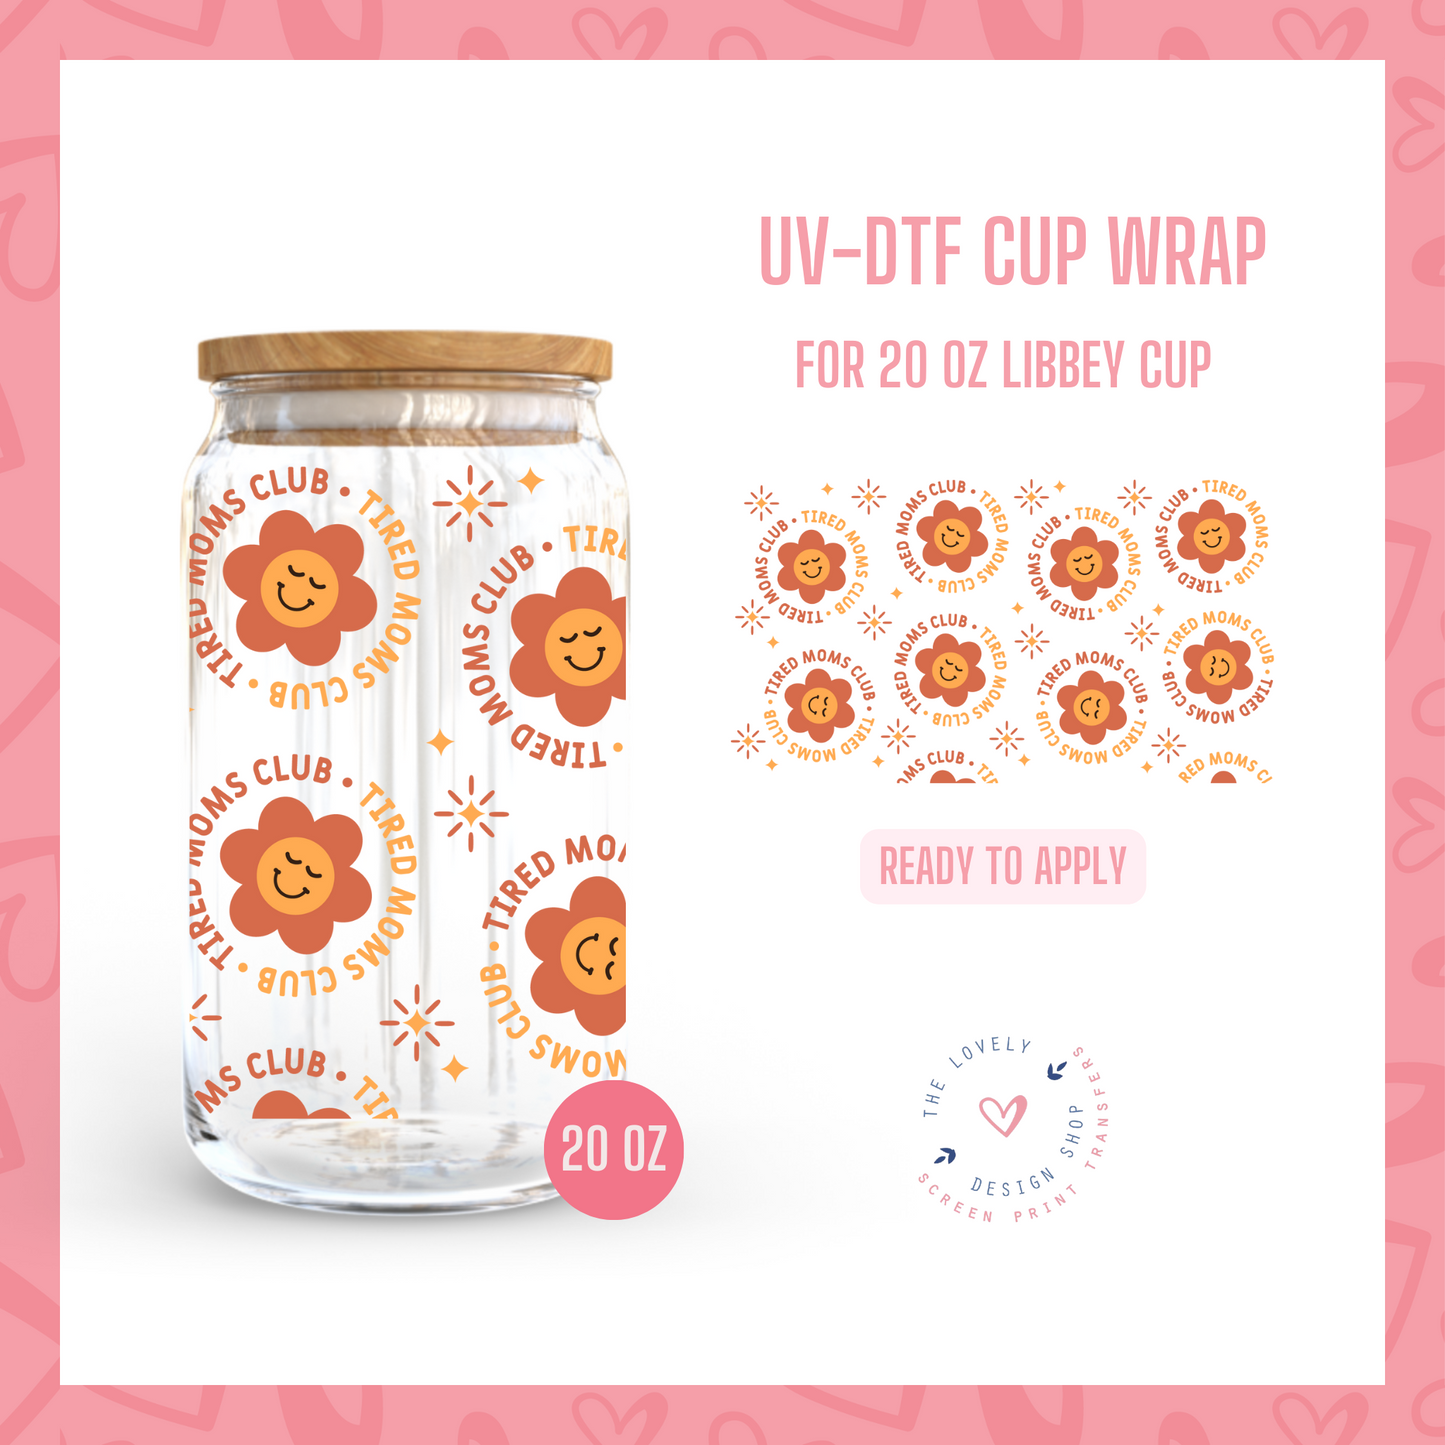 Tired Moms Club - UV DTF 20 oz Libbey Cup Wrap (Ready to Ship) Mar 26